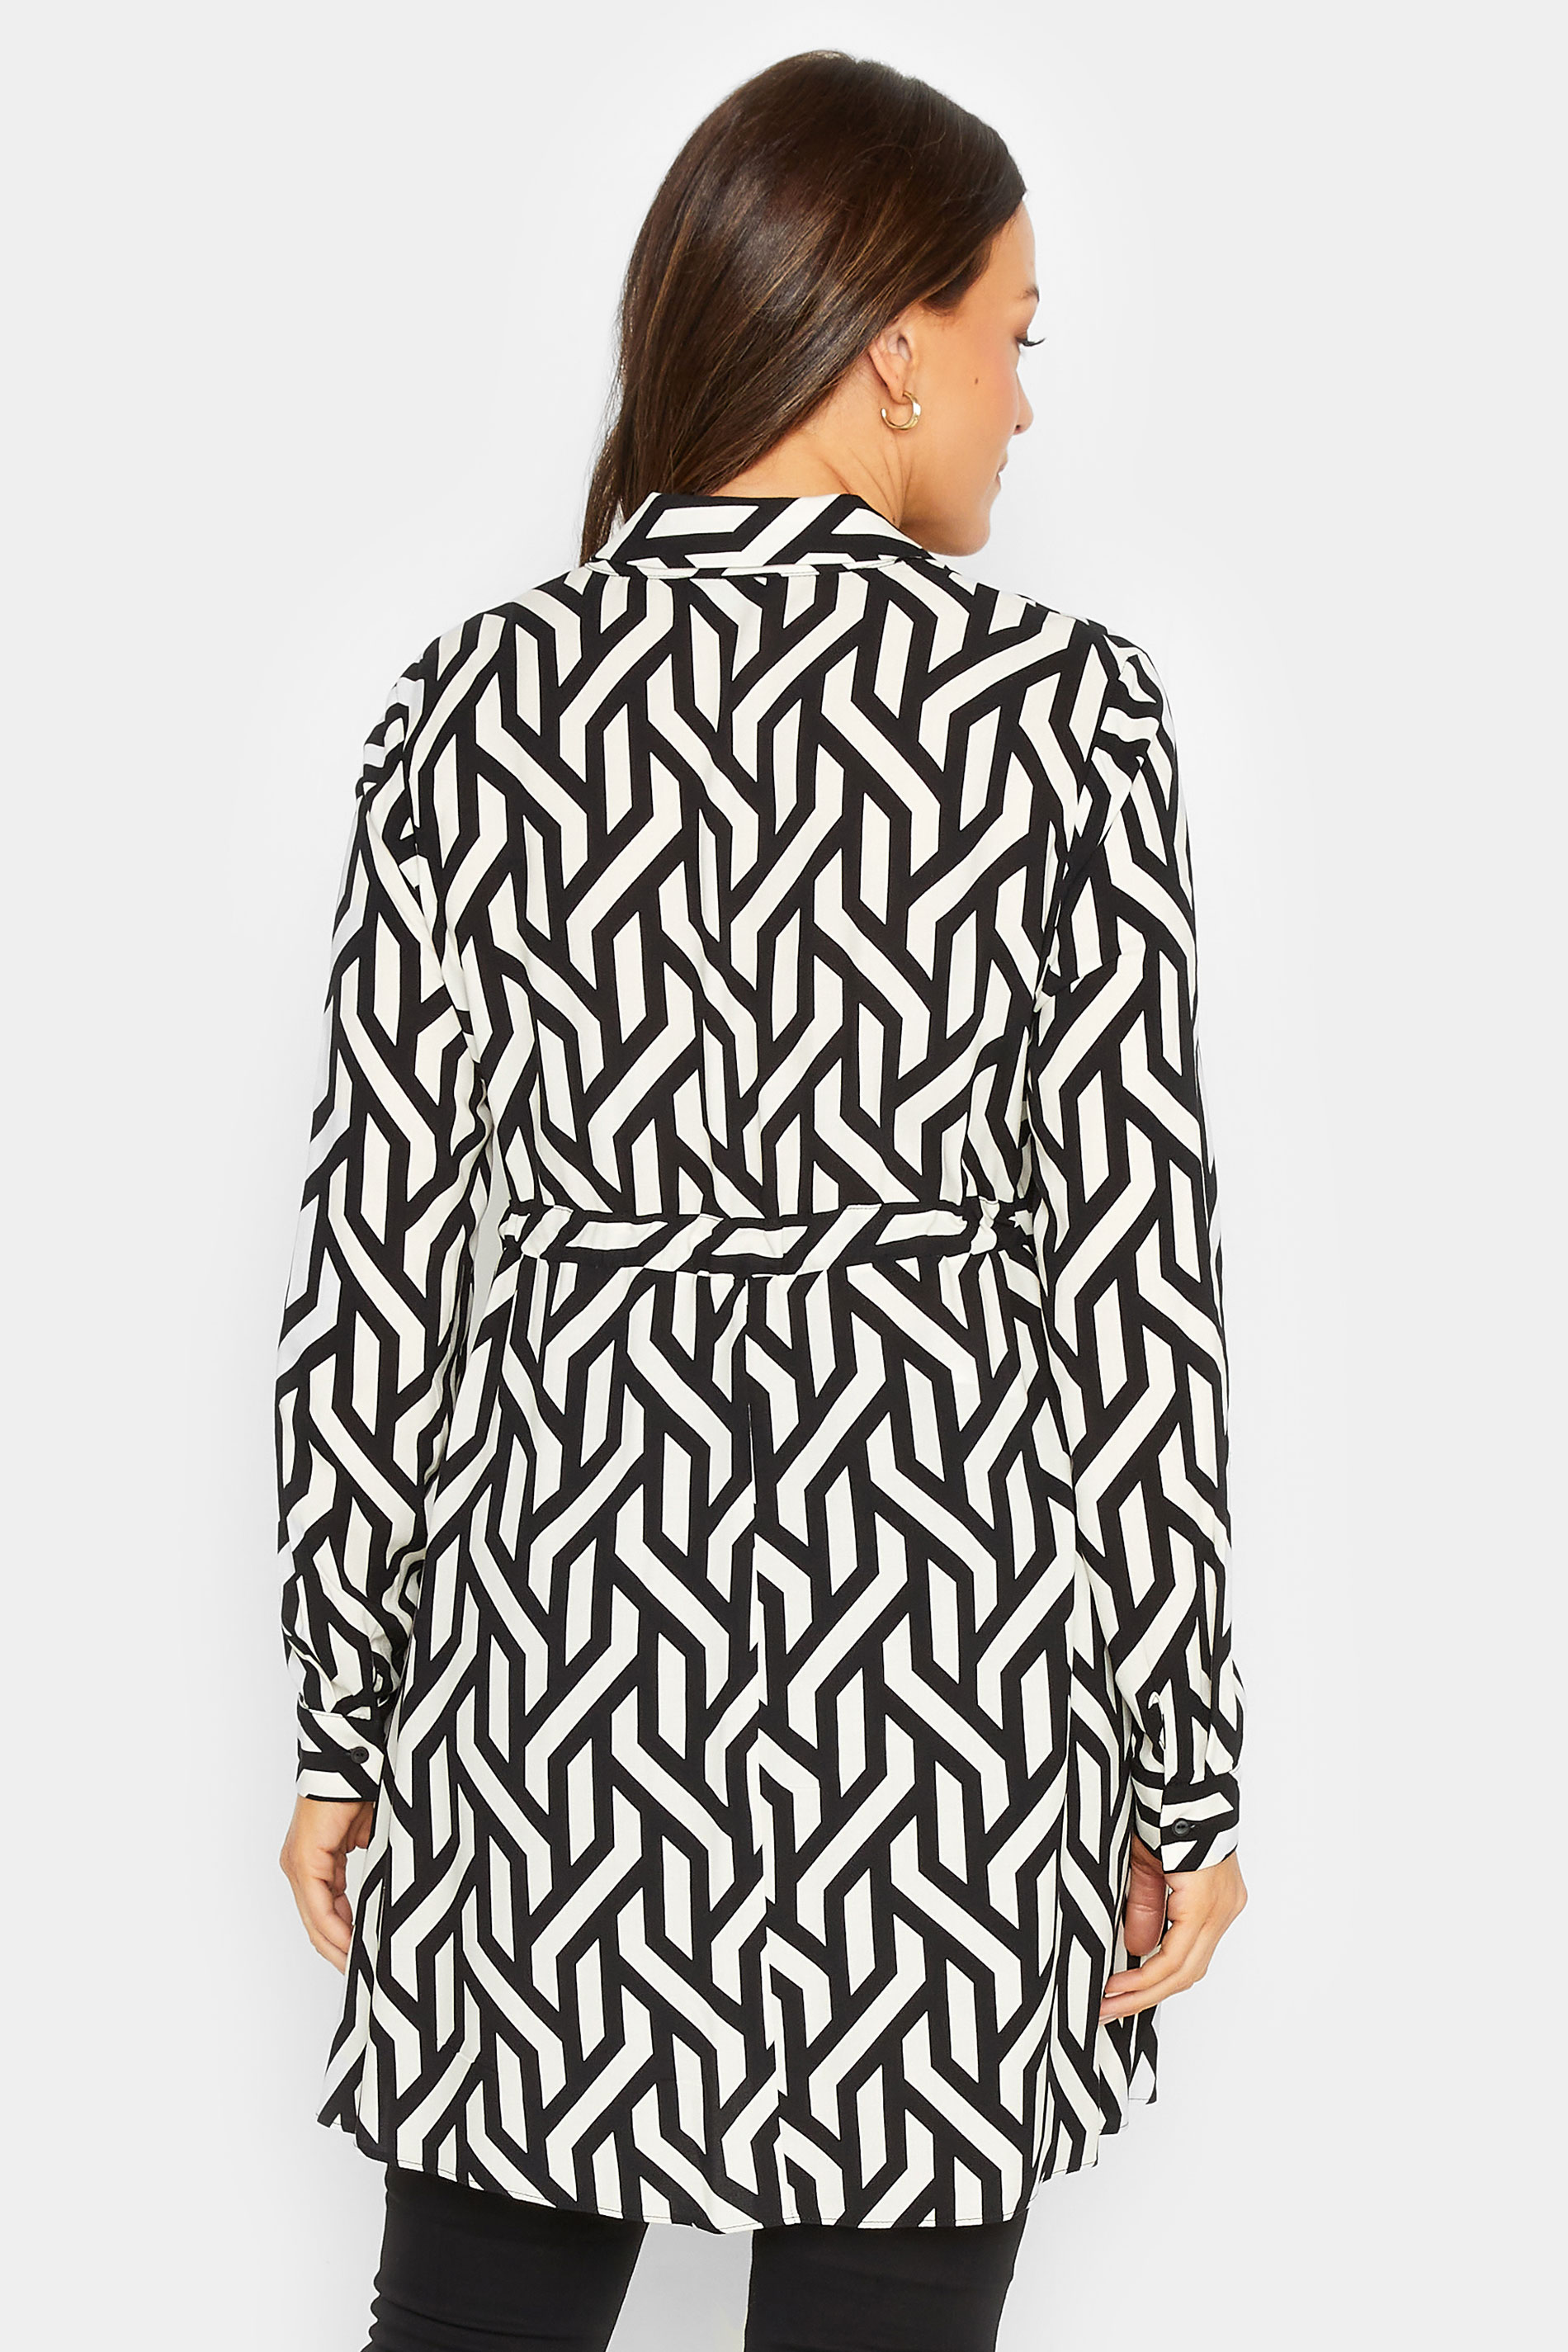 M&Co Black & White Geometric Print Tie Waist Tunic Shirt | M&Co 3